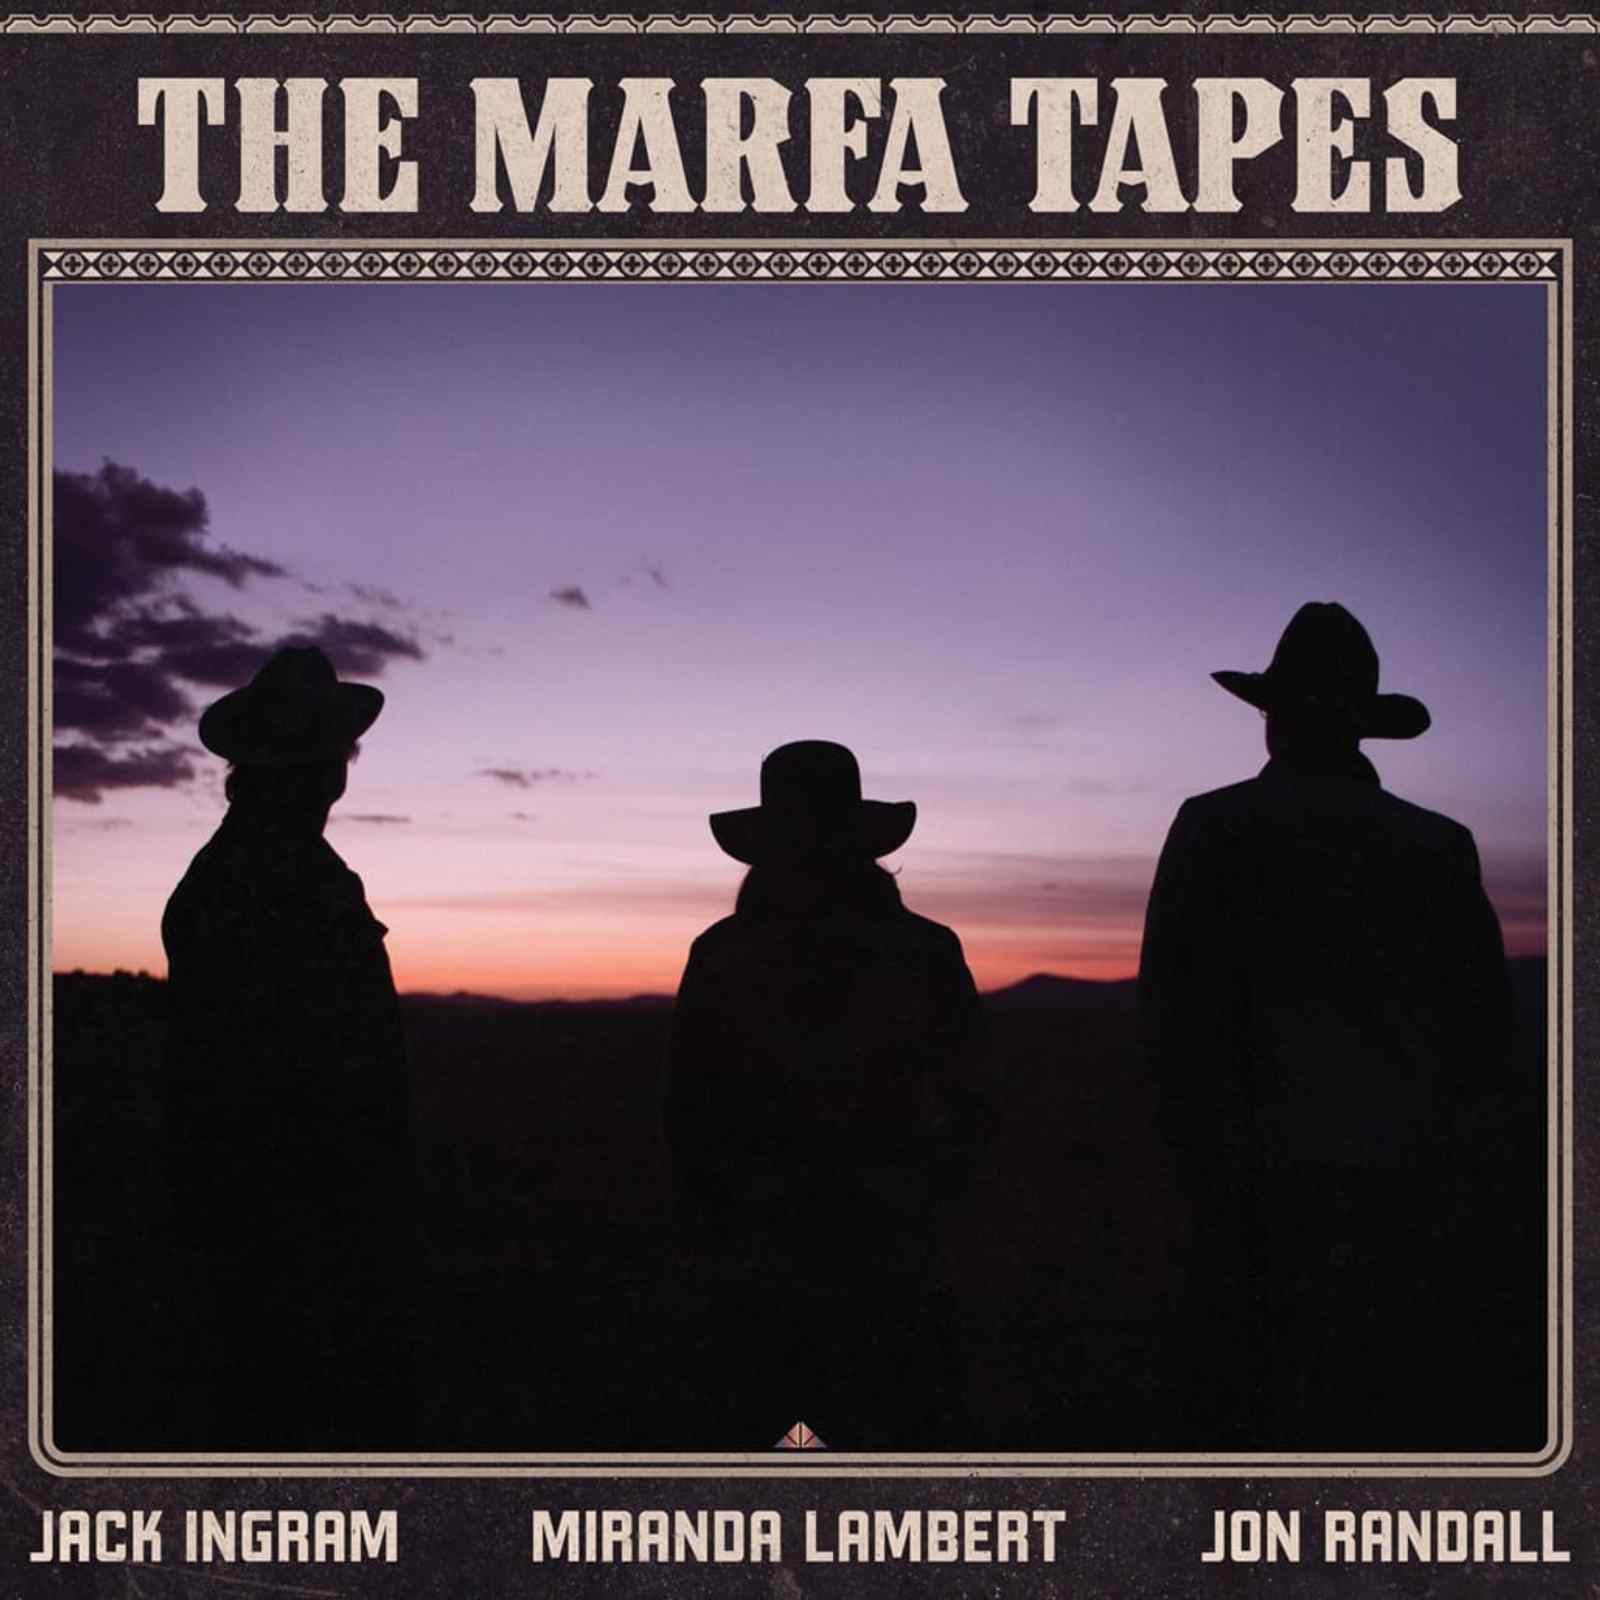 The Marfa Tapes by Jack Ingram, Miranda Lambert and Jon Randall